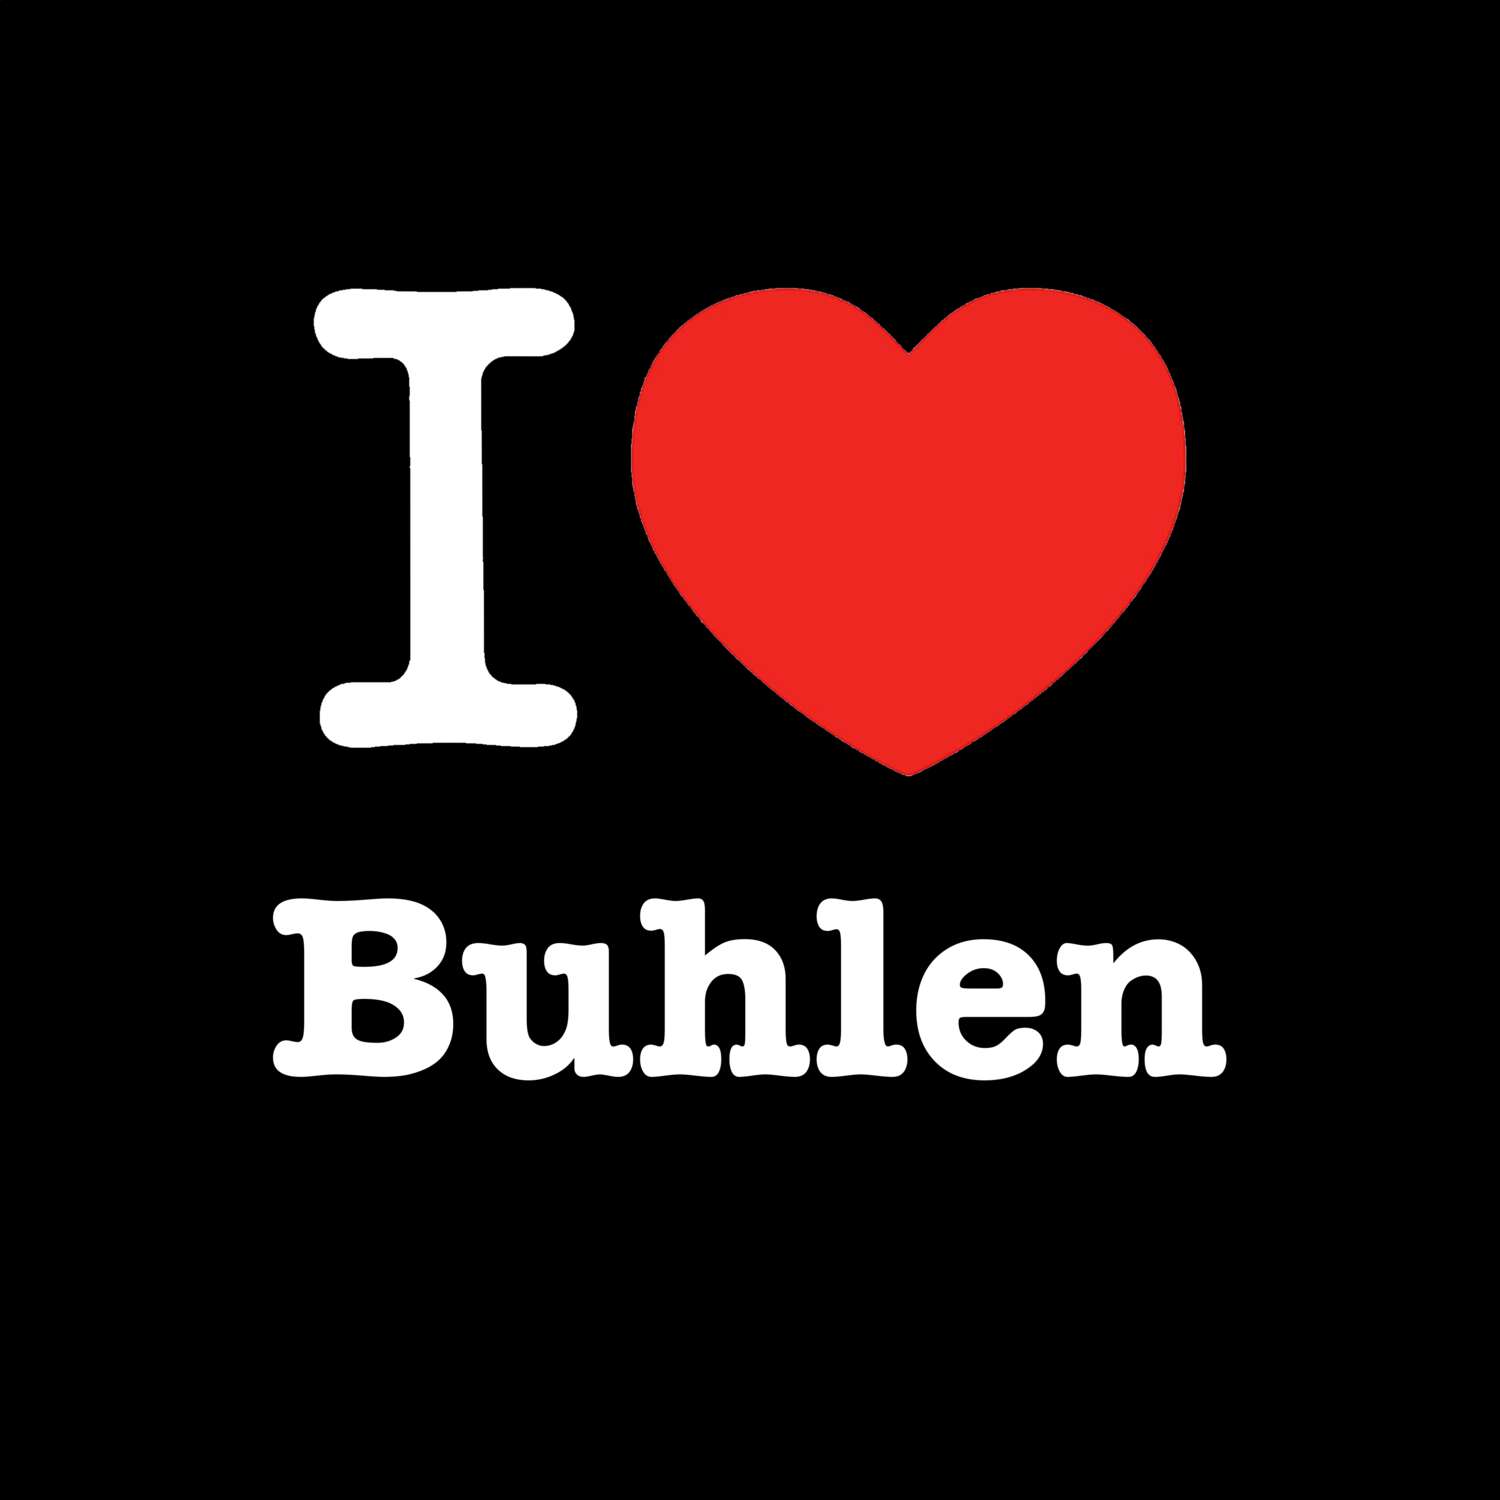 Buhlen T-Shirt »I love«